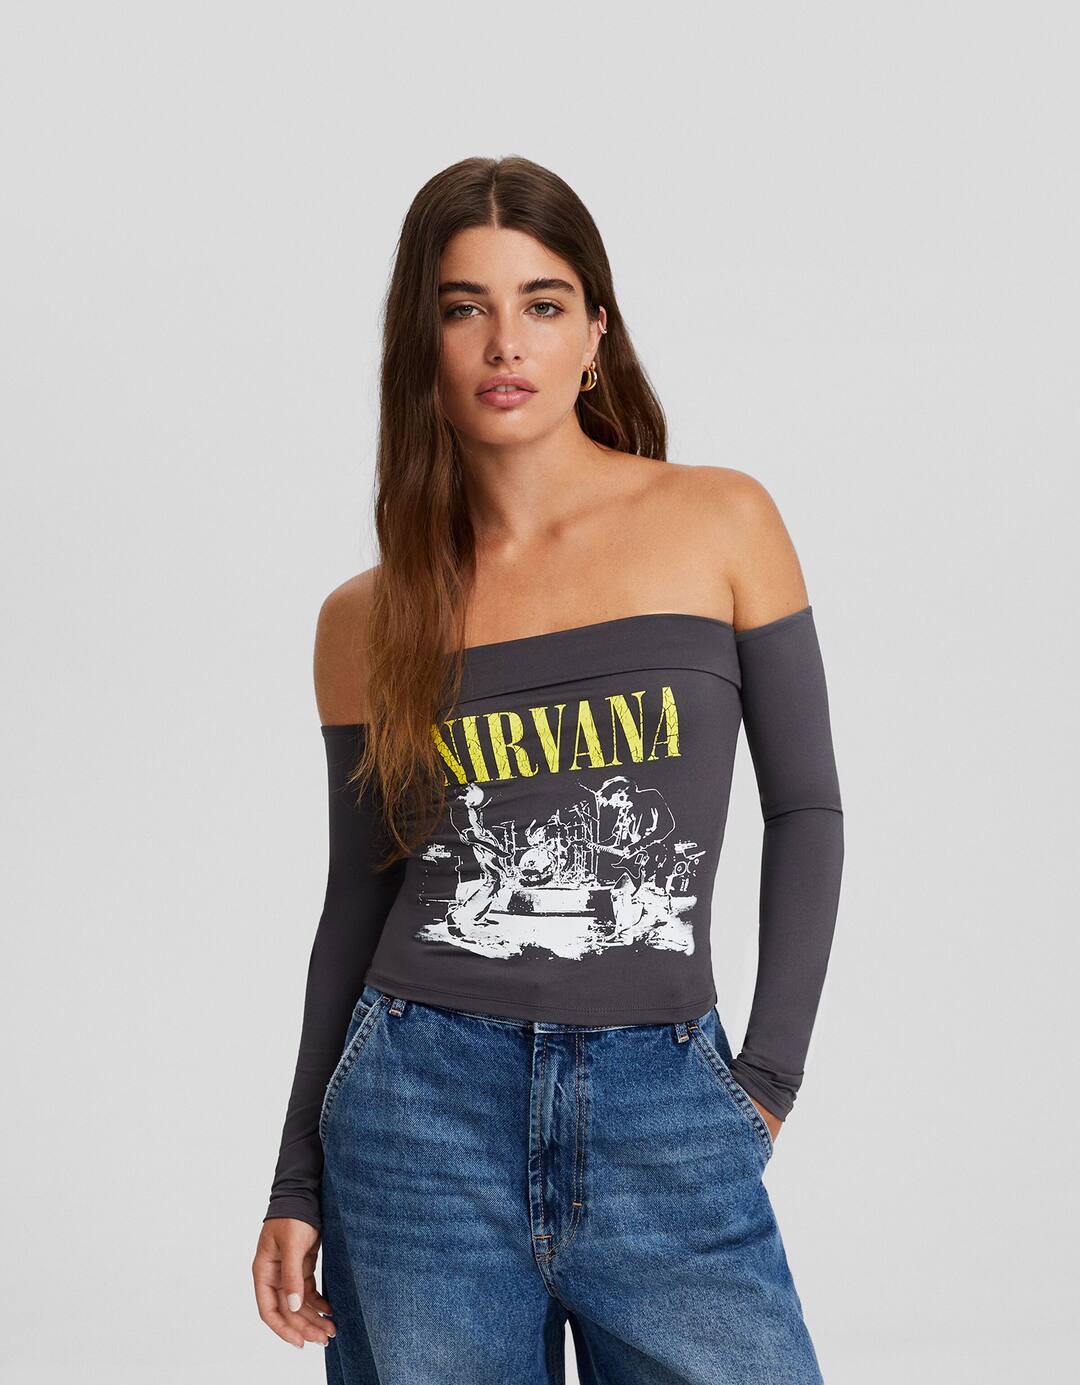 T-shirt Nirvana manga comprida estampado